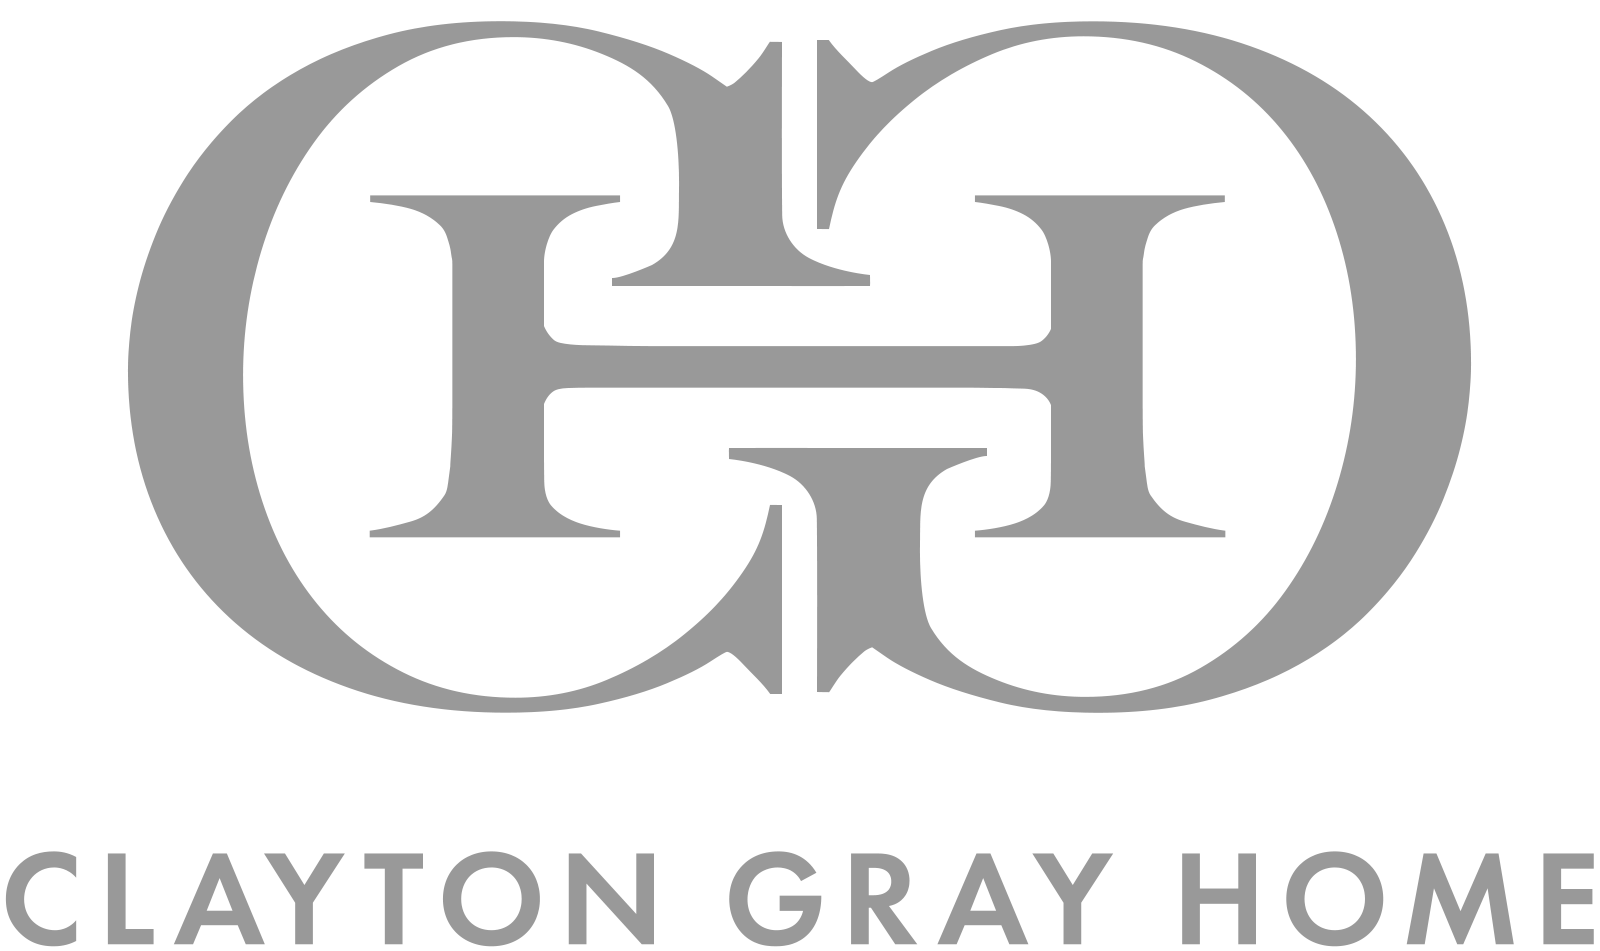 CLAYTON GRAY HOME